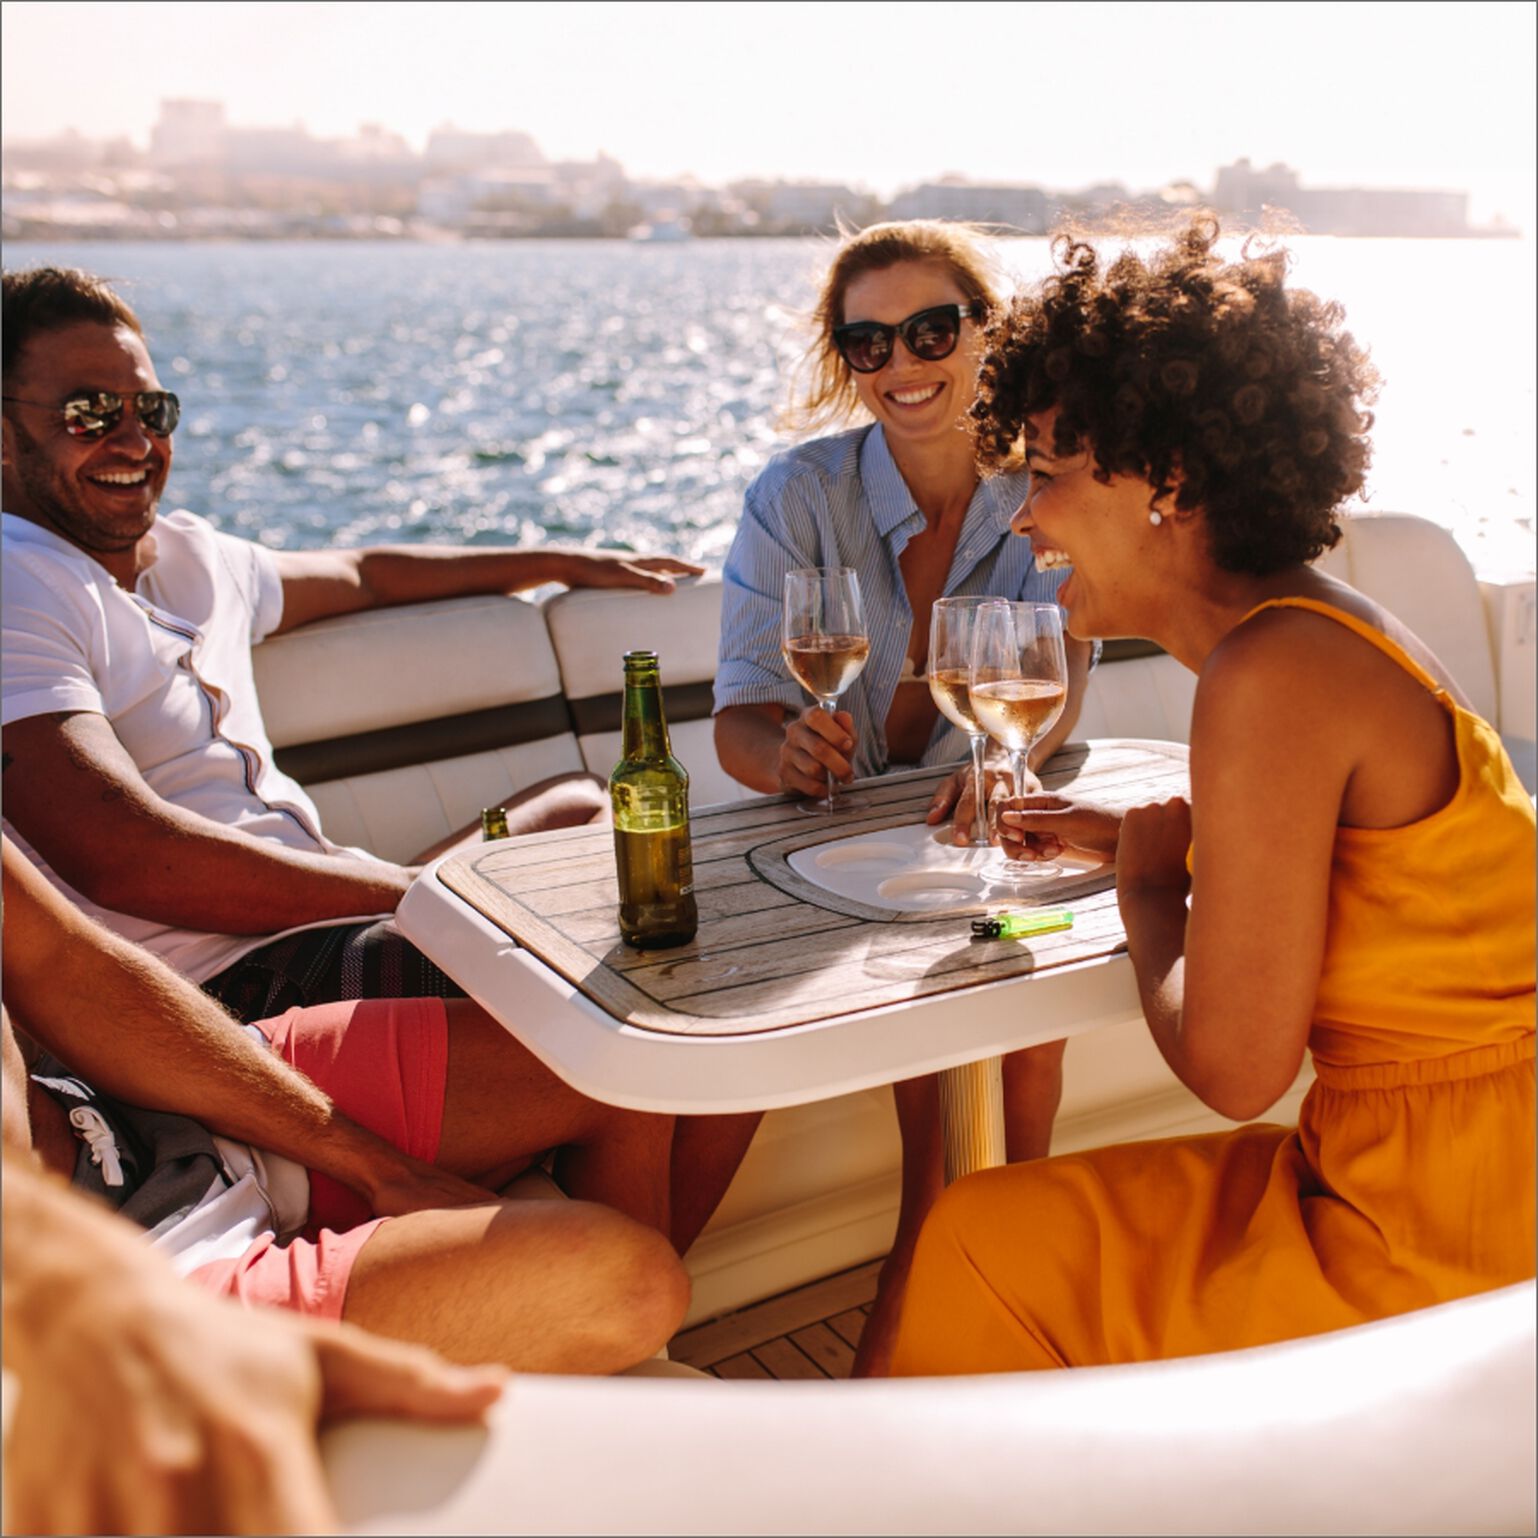 People enjoying wine on a boat